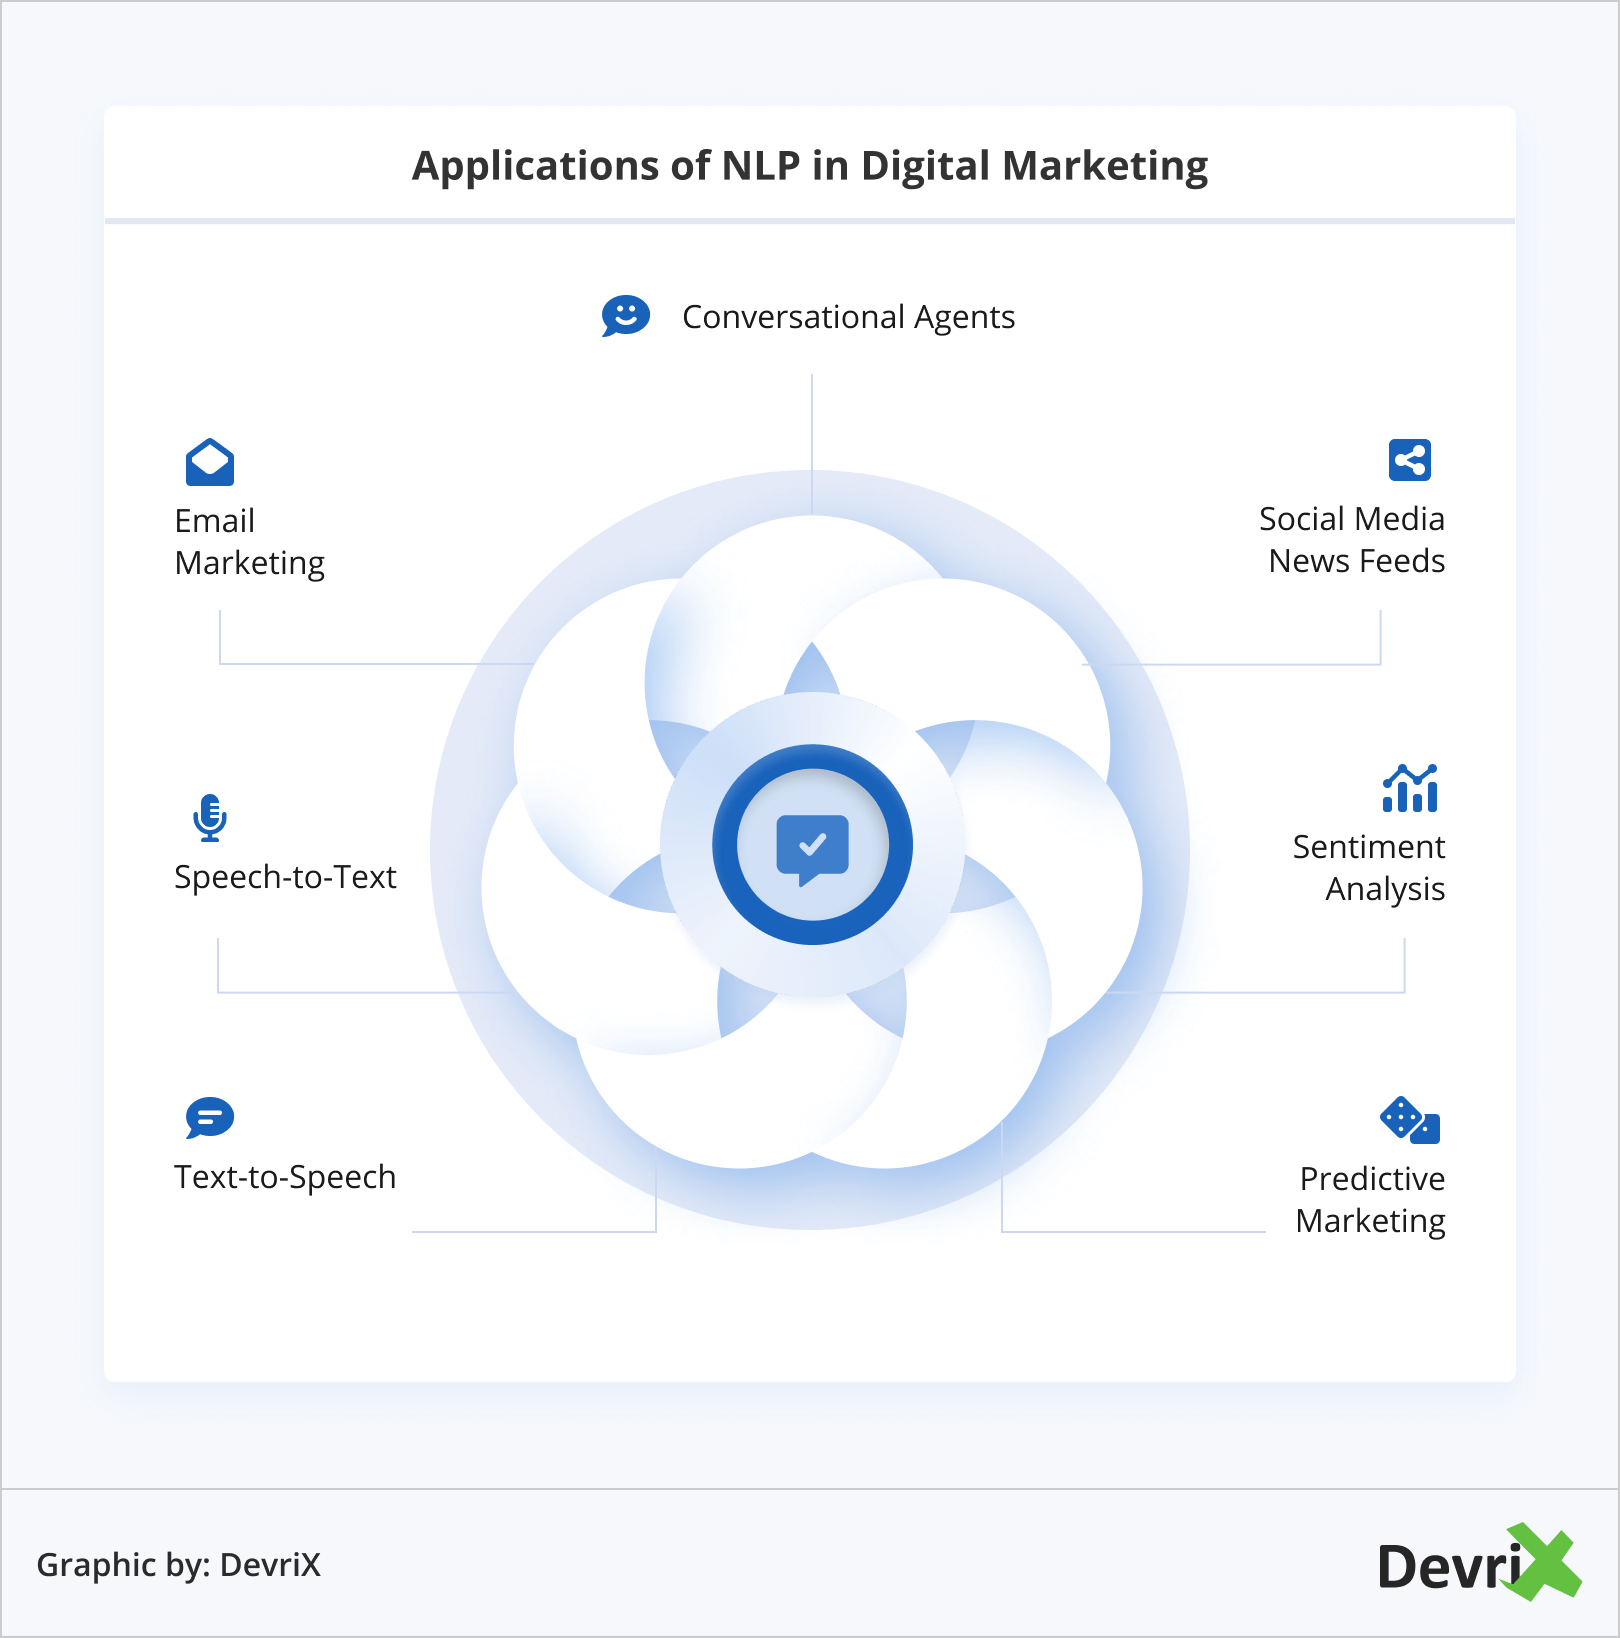 Applications of NLP in Digital Marketing